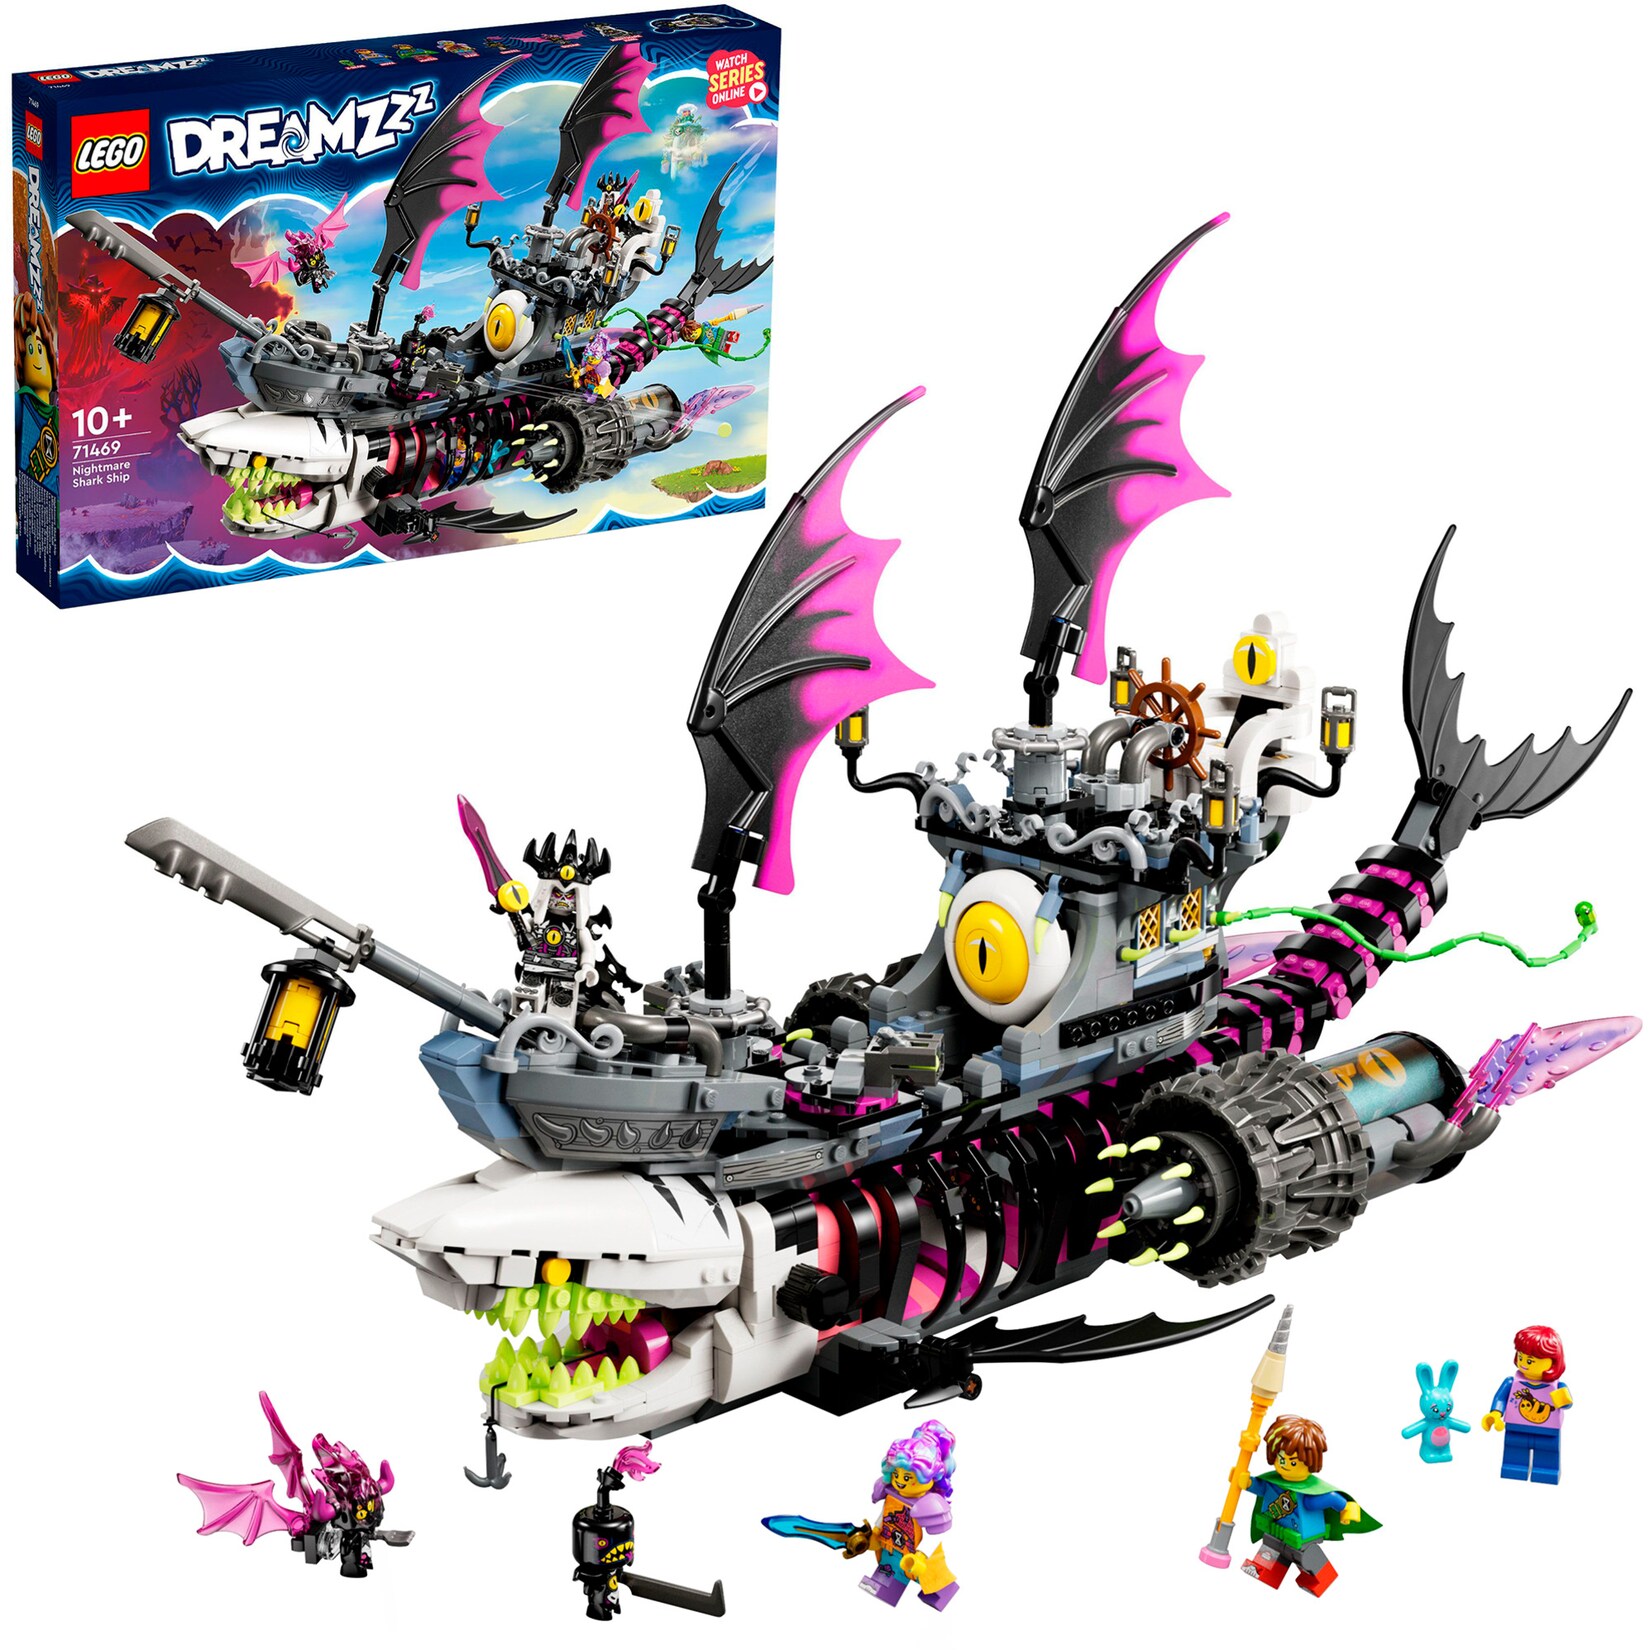 LEGO Konstruktionsspielzeug DREAMZzz Albtraum-Haischiff